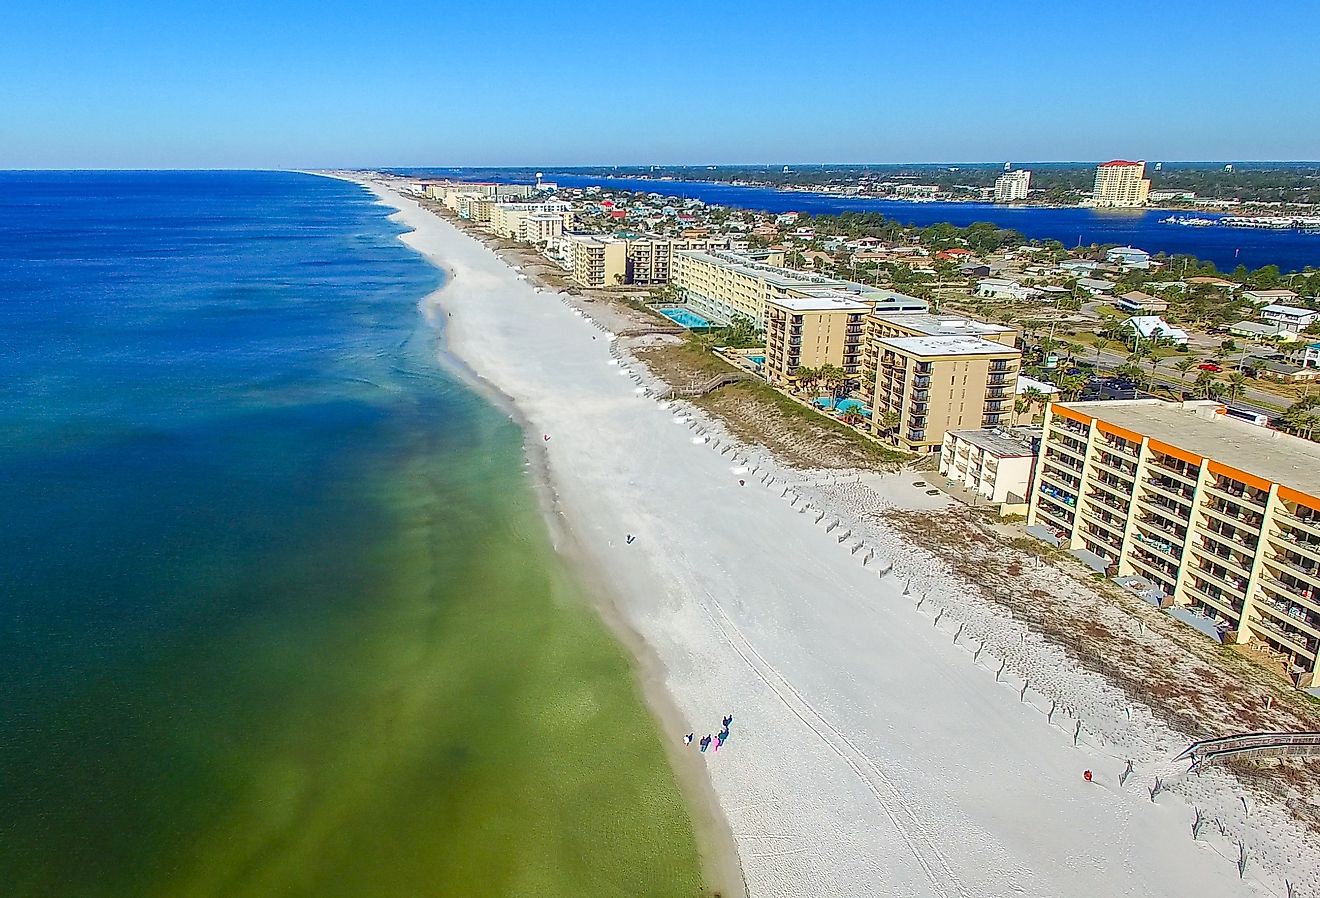 Overlooking Fort Walton beach, Florida. Image credit pisaphotography via Shutterstock